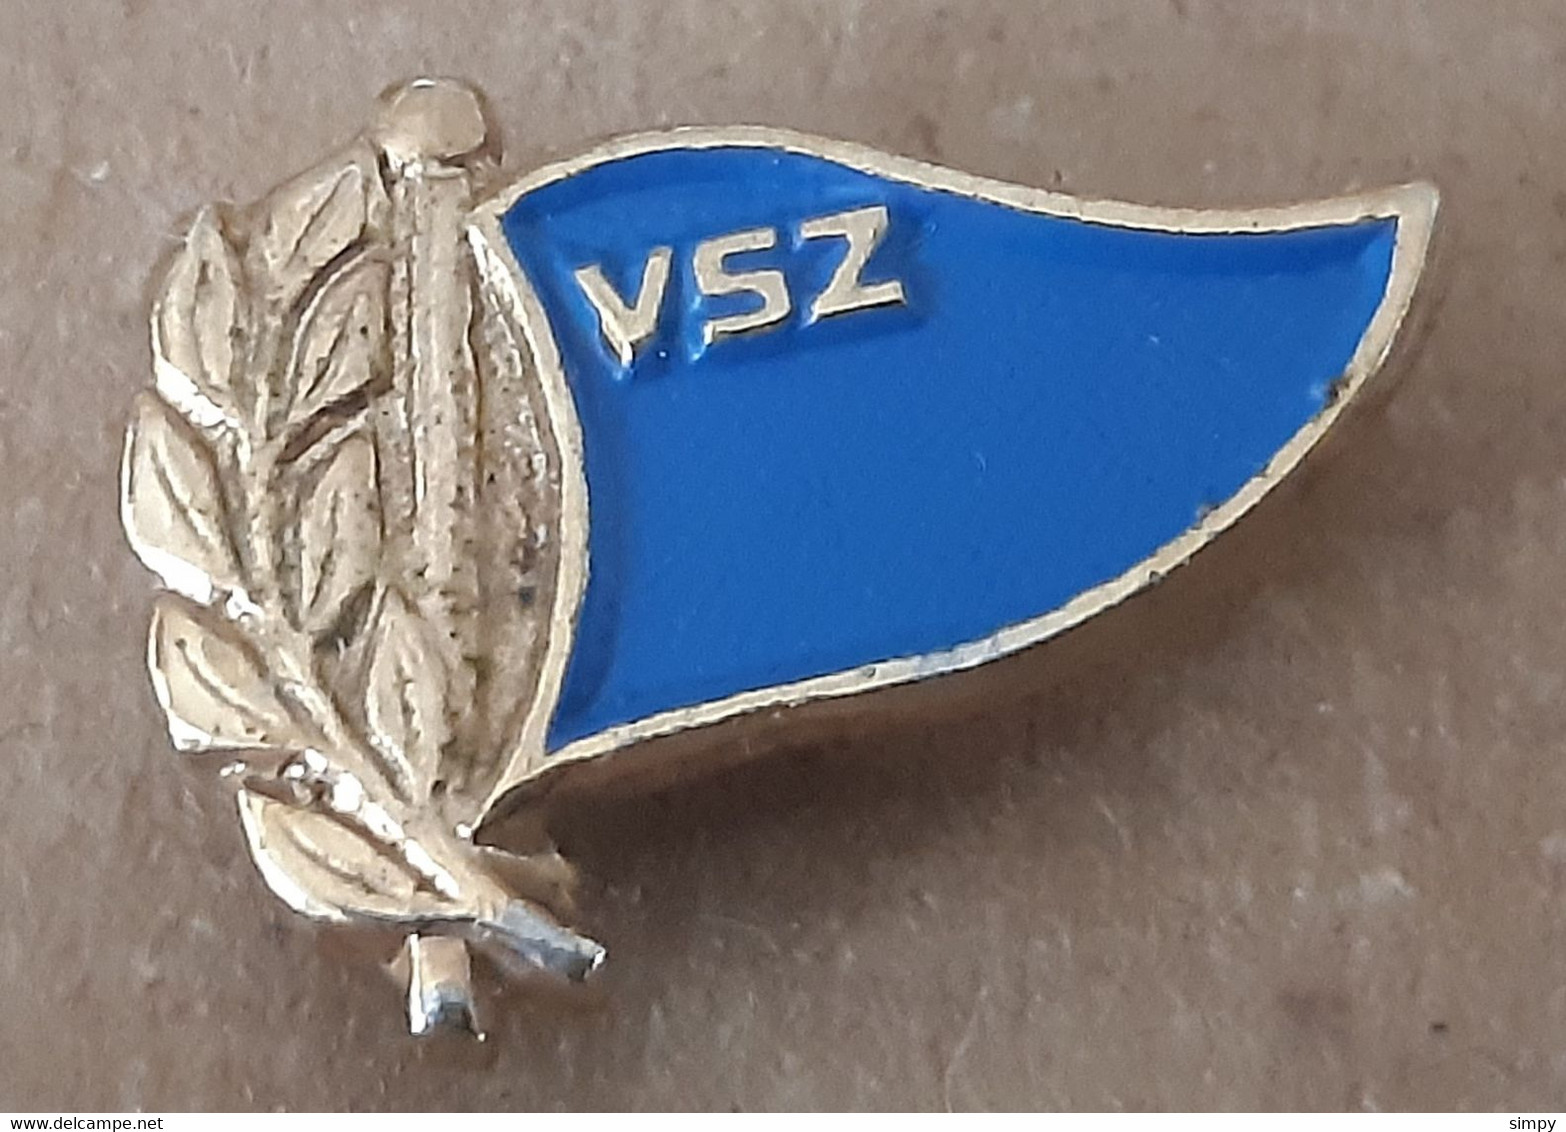 Rowing  Federation Of Zagreb VSZ Croatia Vintage Badge Pin - Rowing